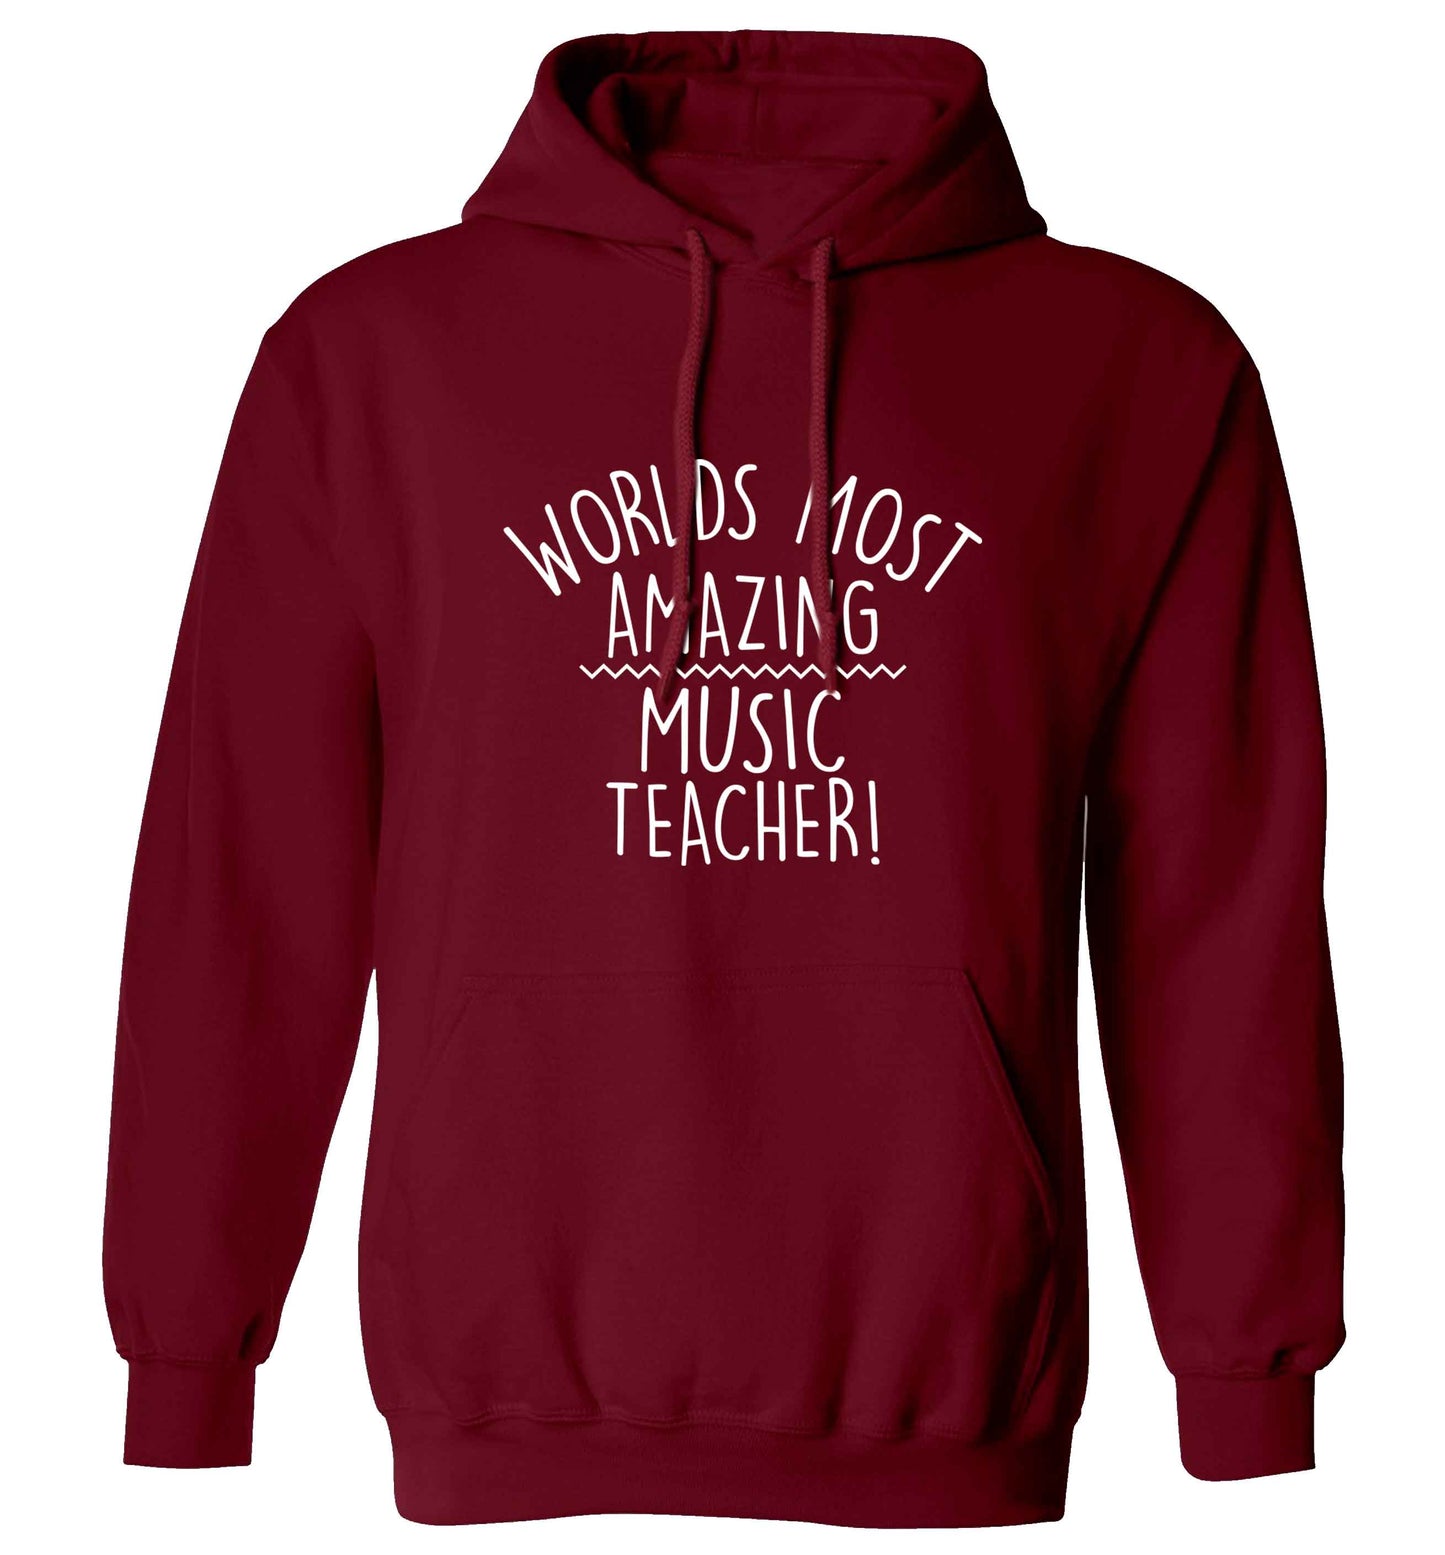 Worlds most amazing music teacher adults unisex maroon hoodie 2XL